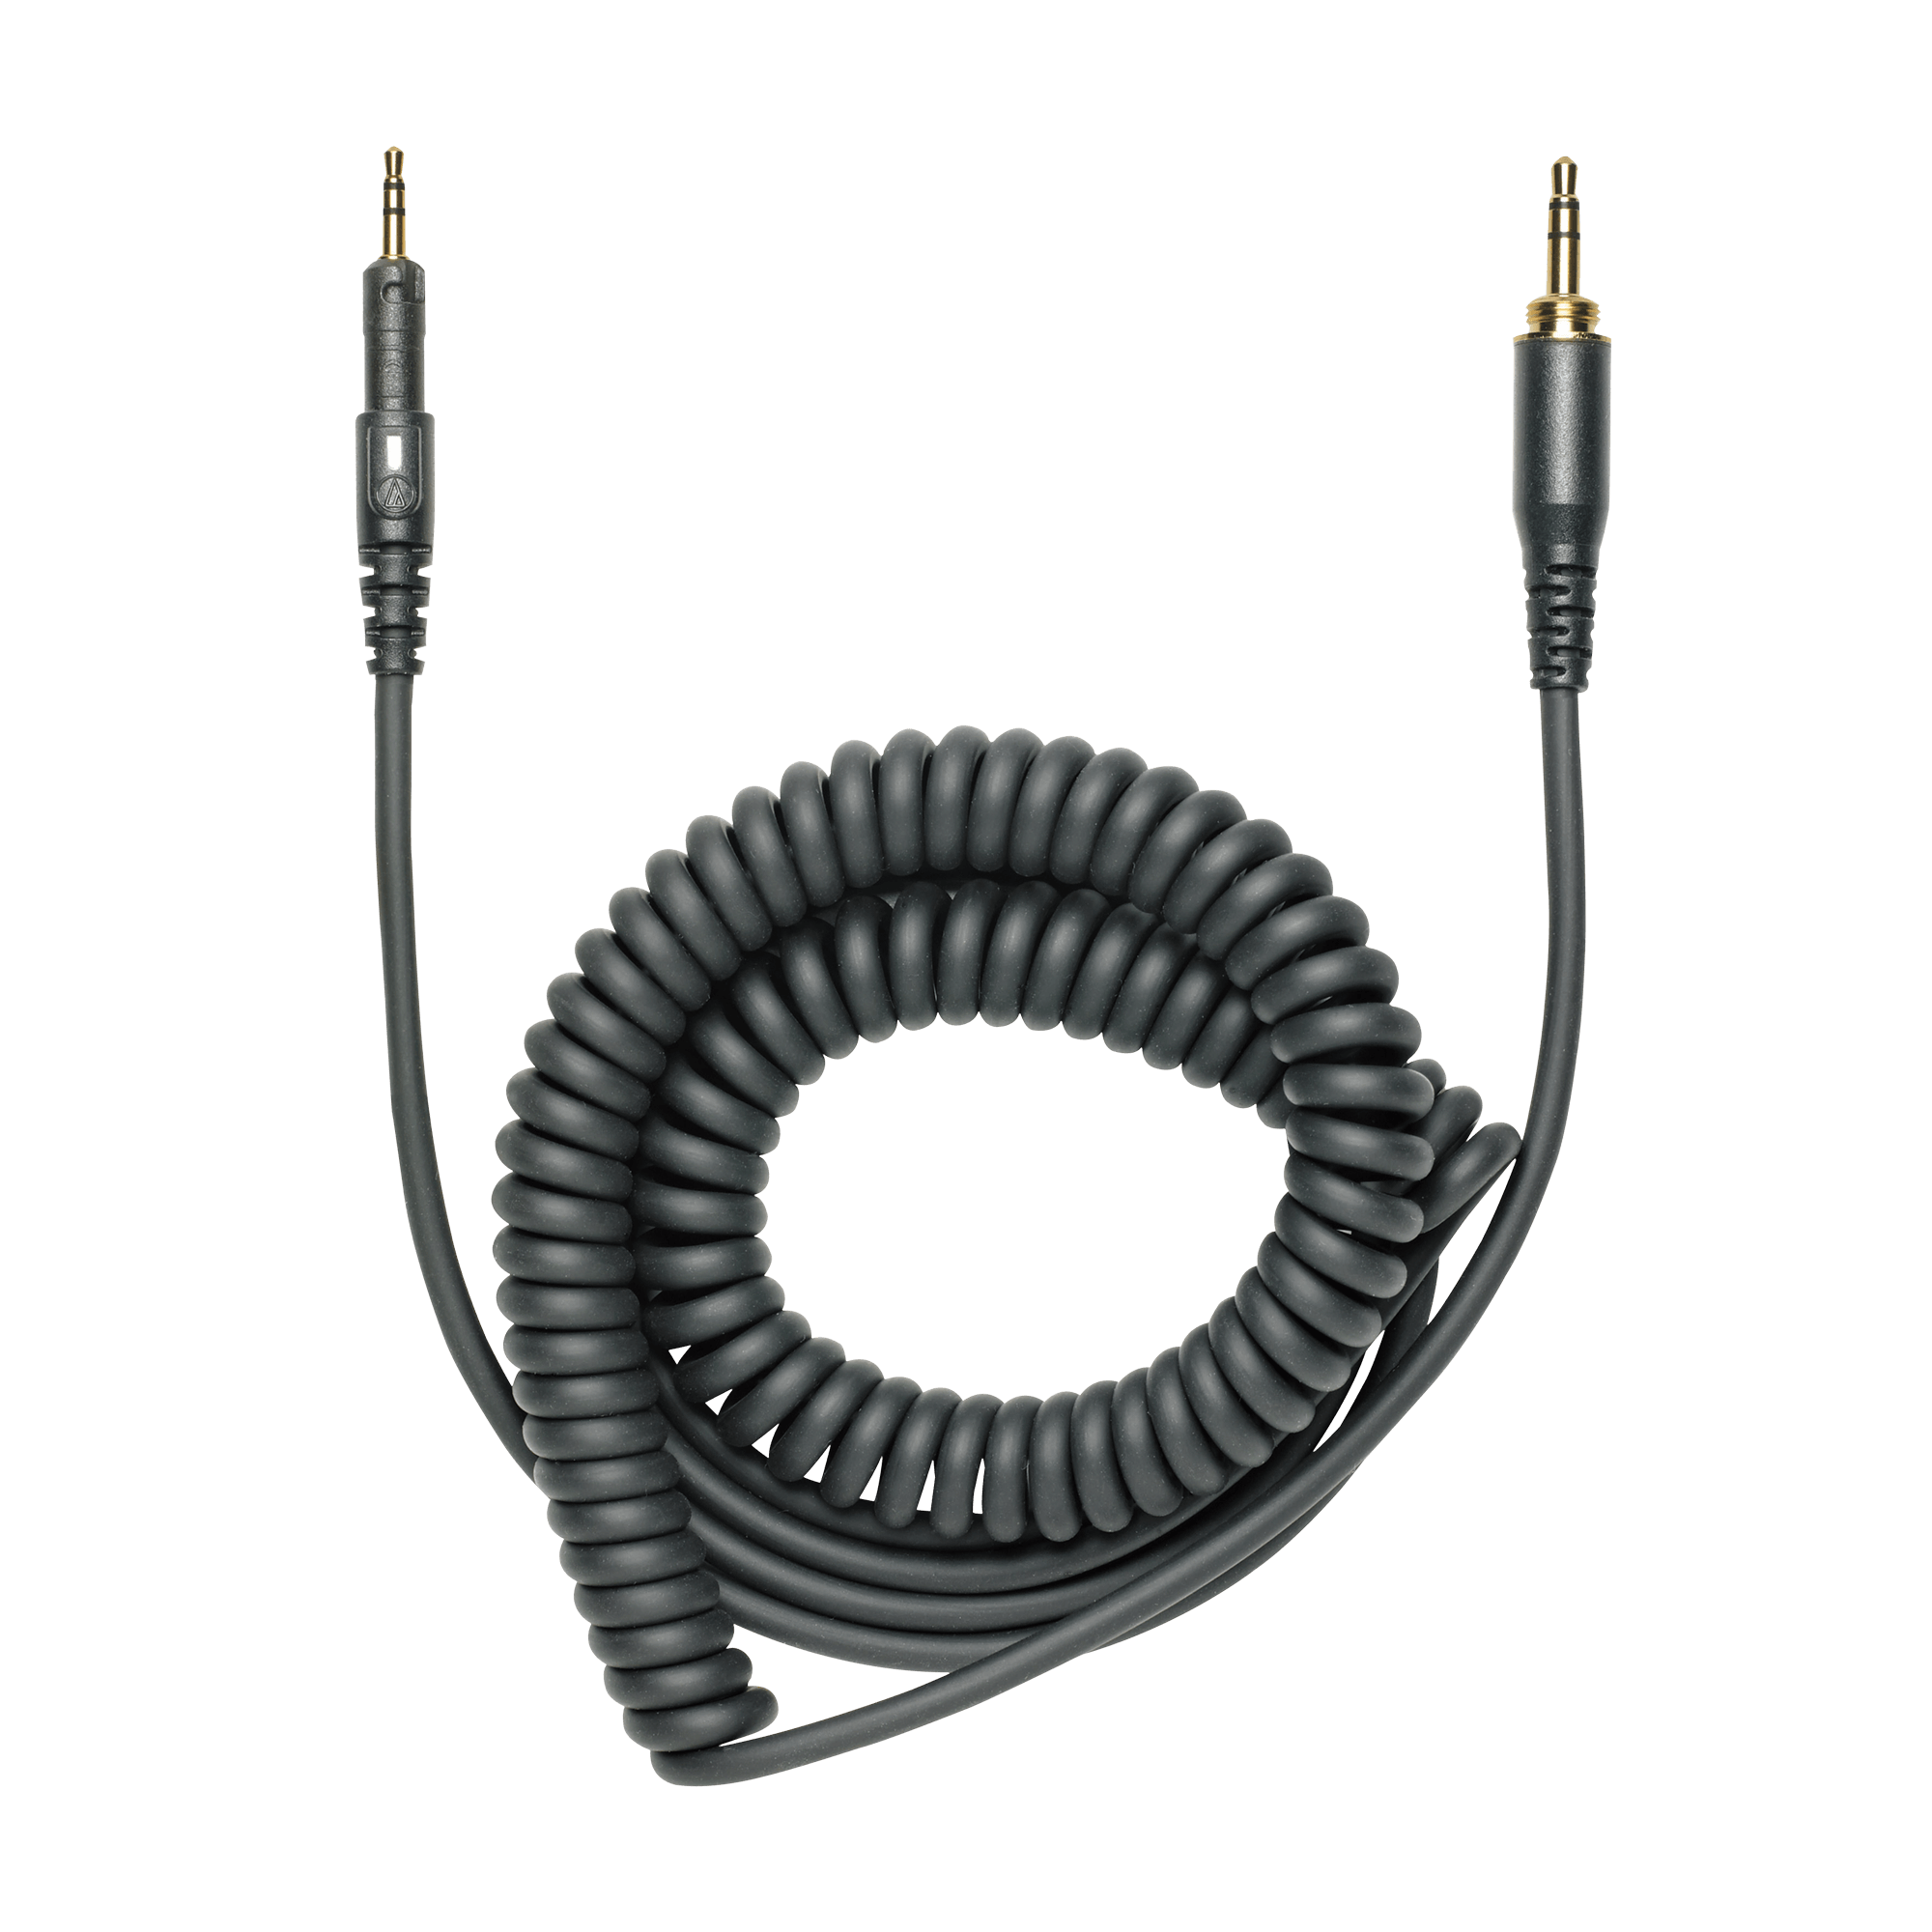 ATH-M70xProfessional monitor headphones | Audio-Technica